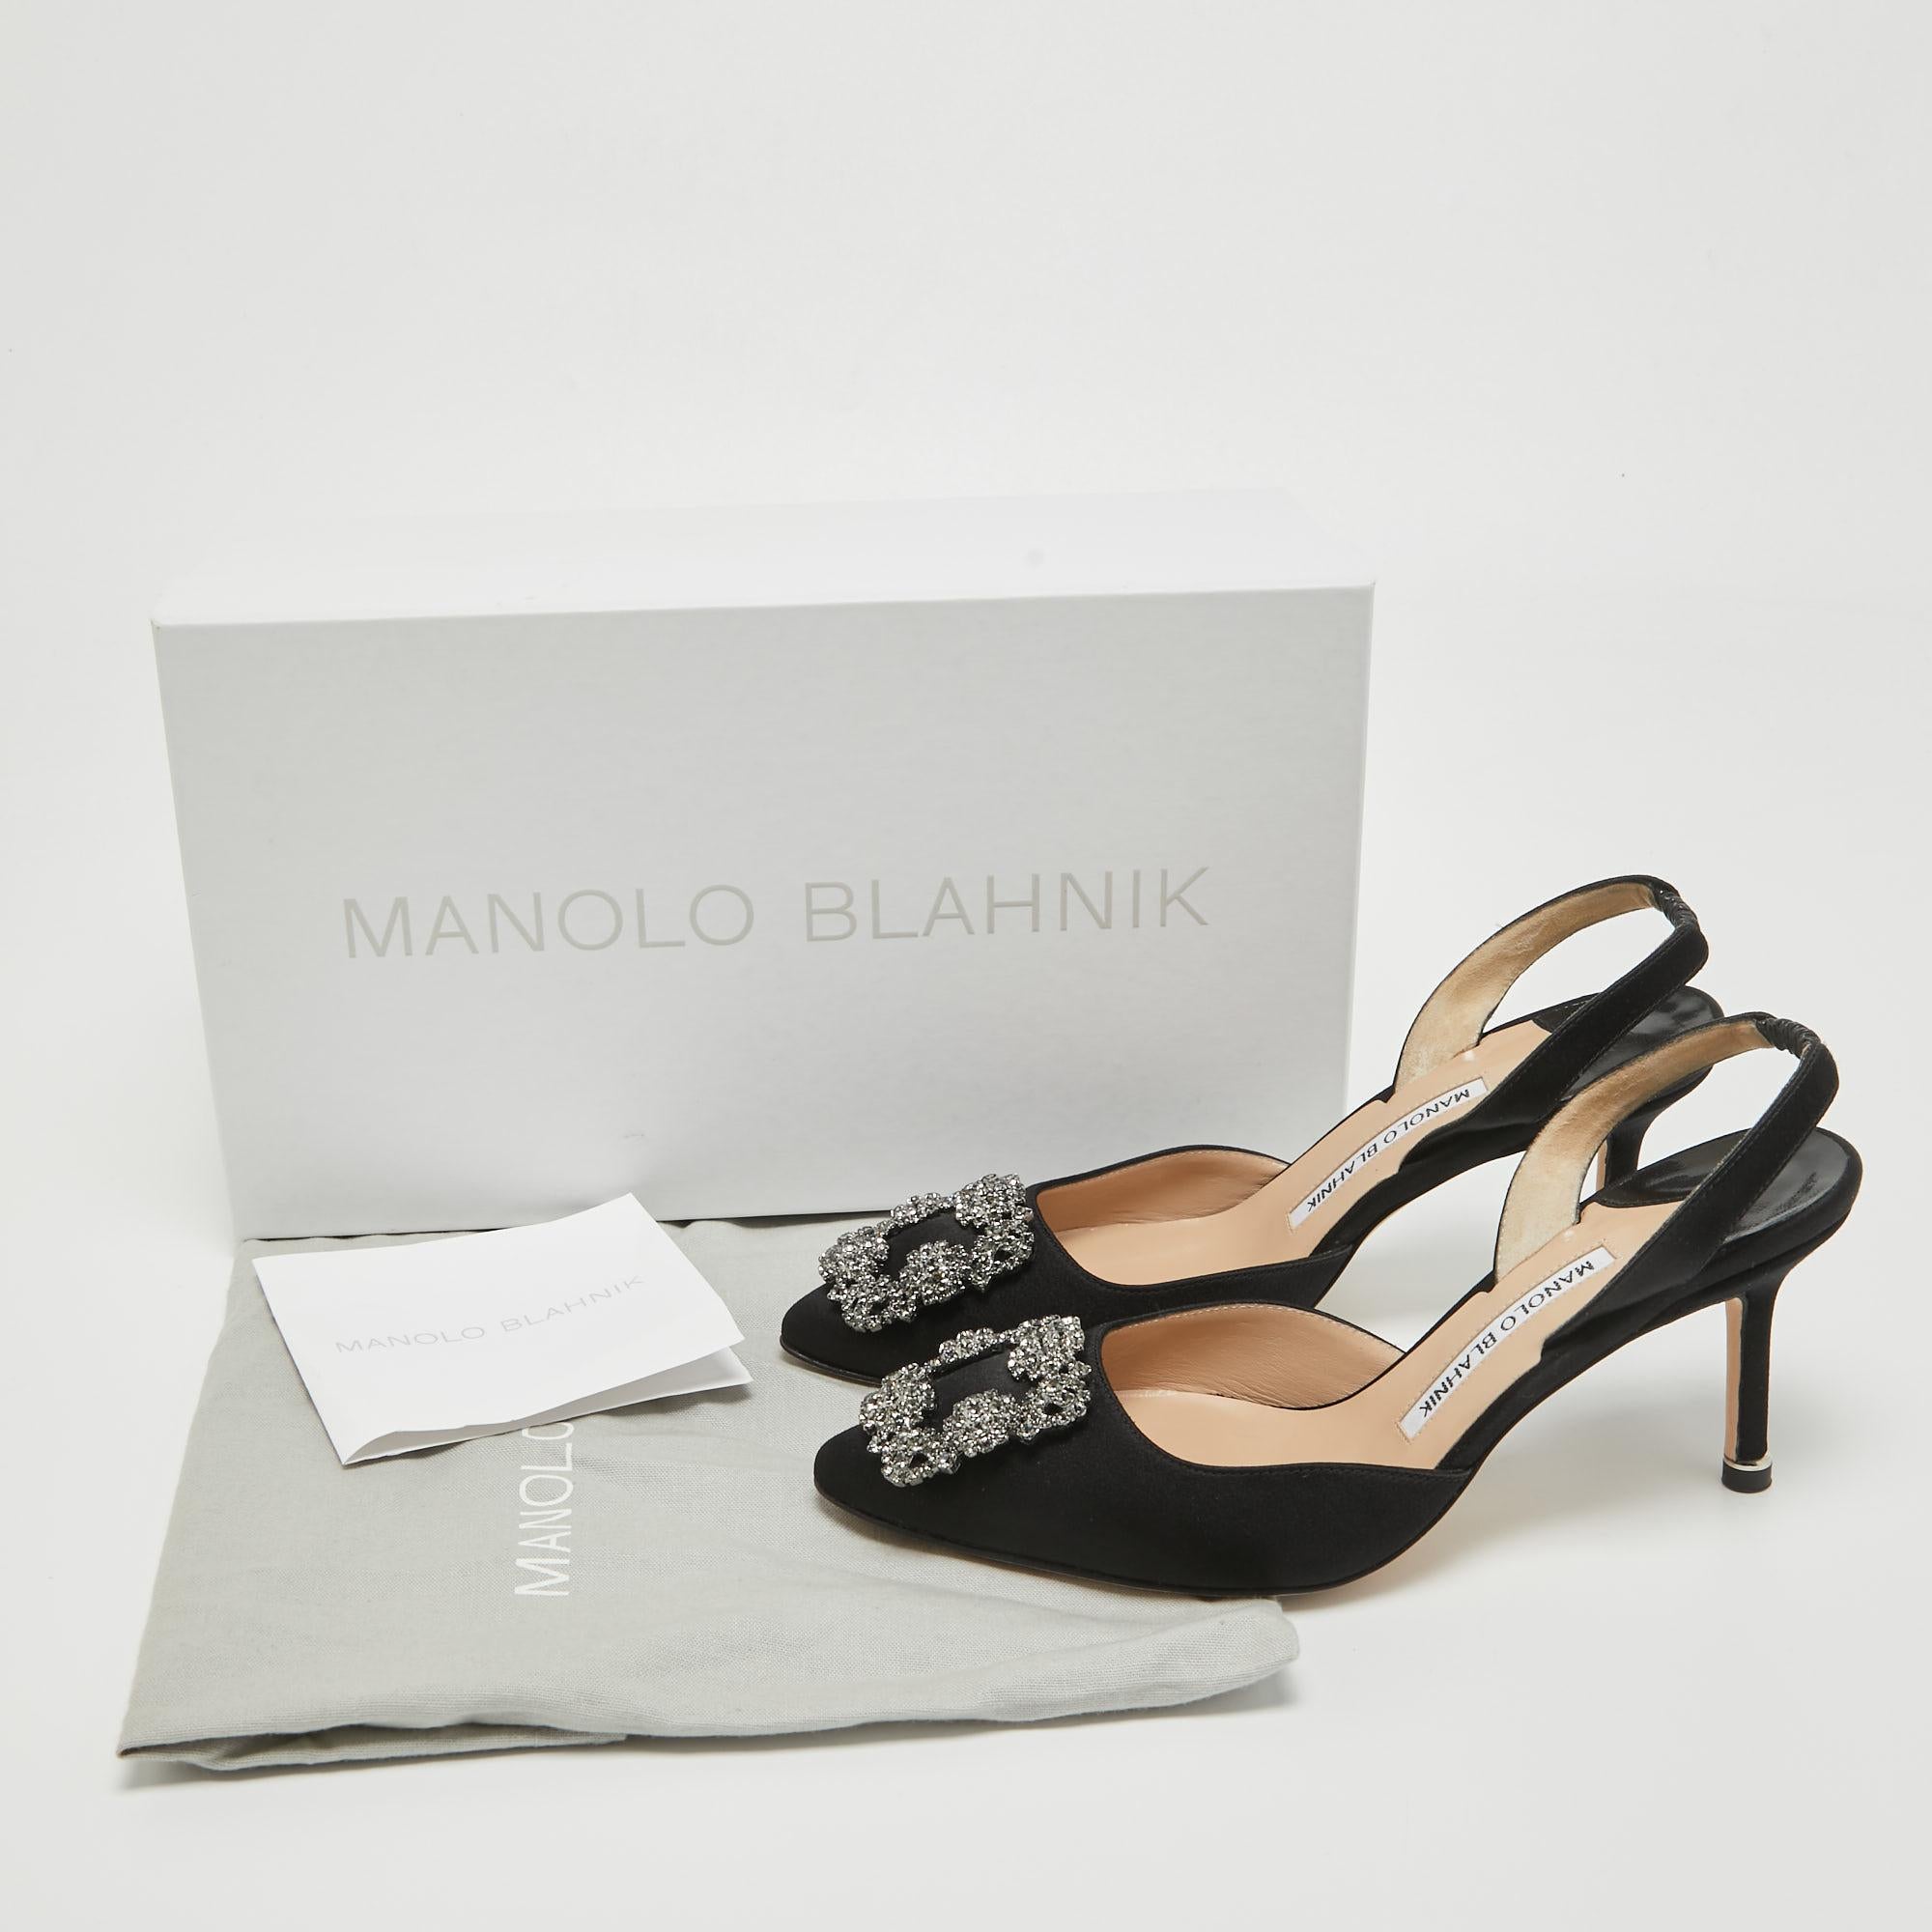 Manolo Blahnik Black Satin Hangisli Slingback Pumps Size 37 5